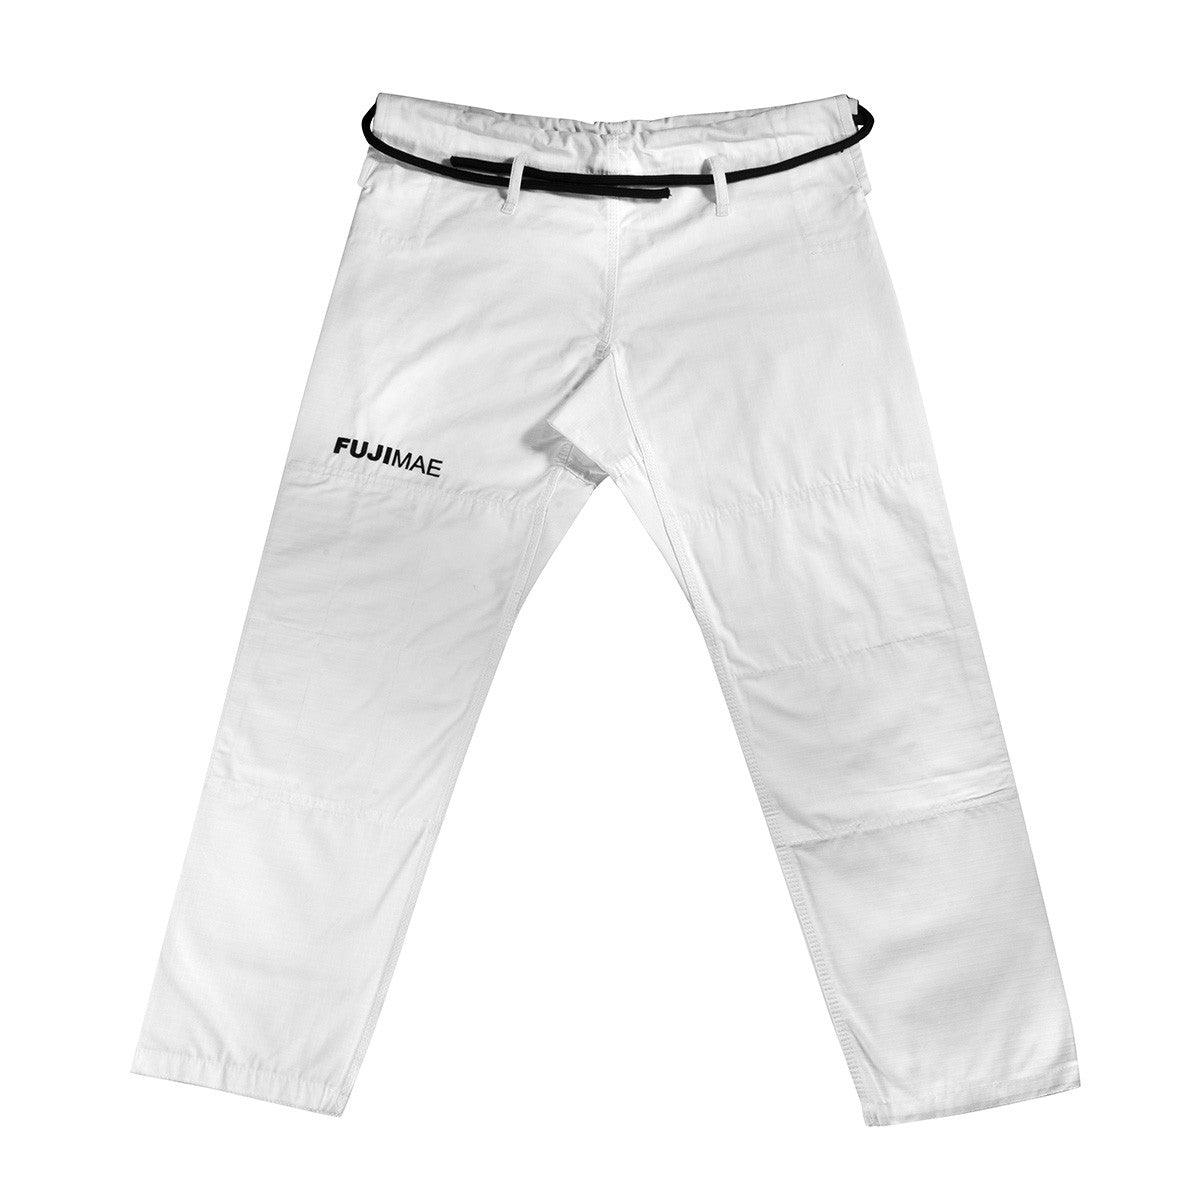 Pantalon de Jiu Jitsu Brésilien Training 2 Fuji Mae - Blanc